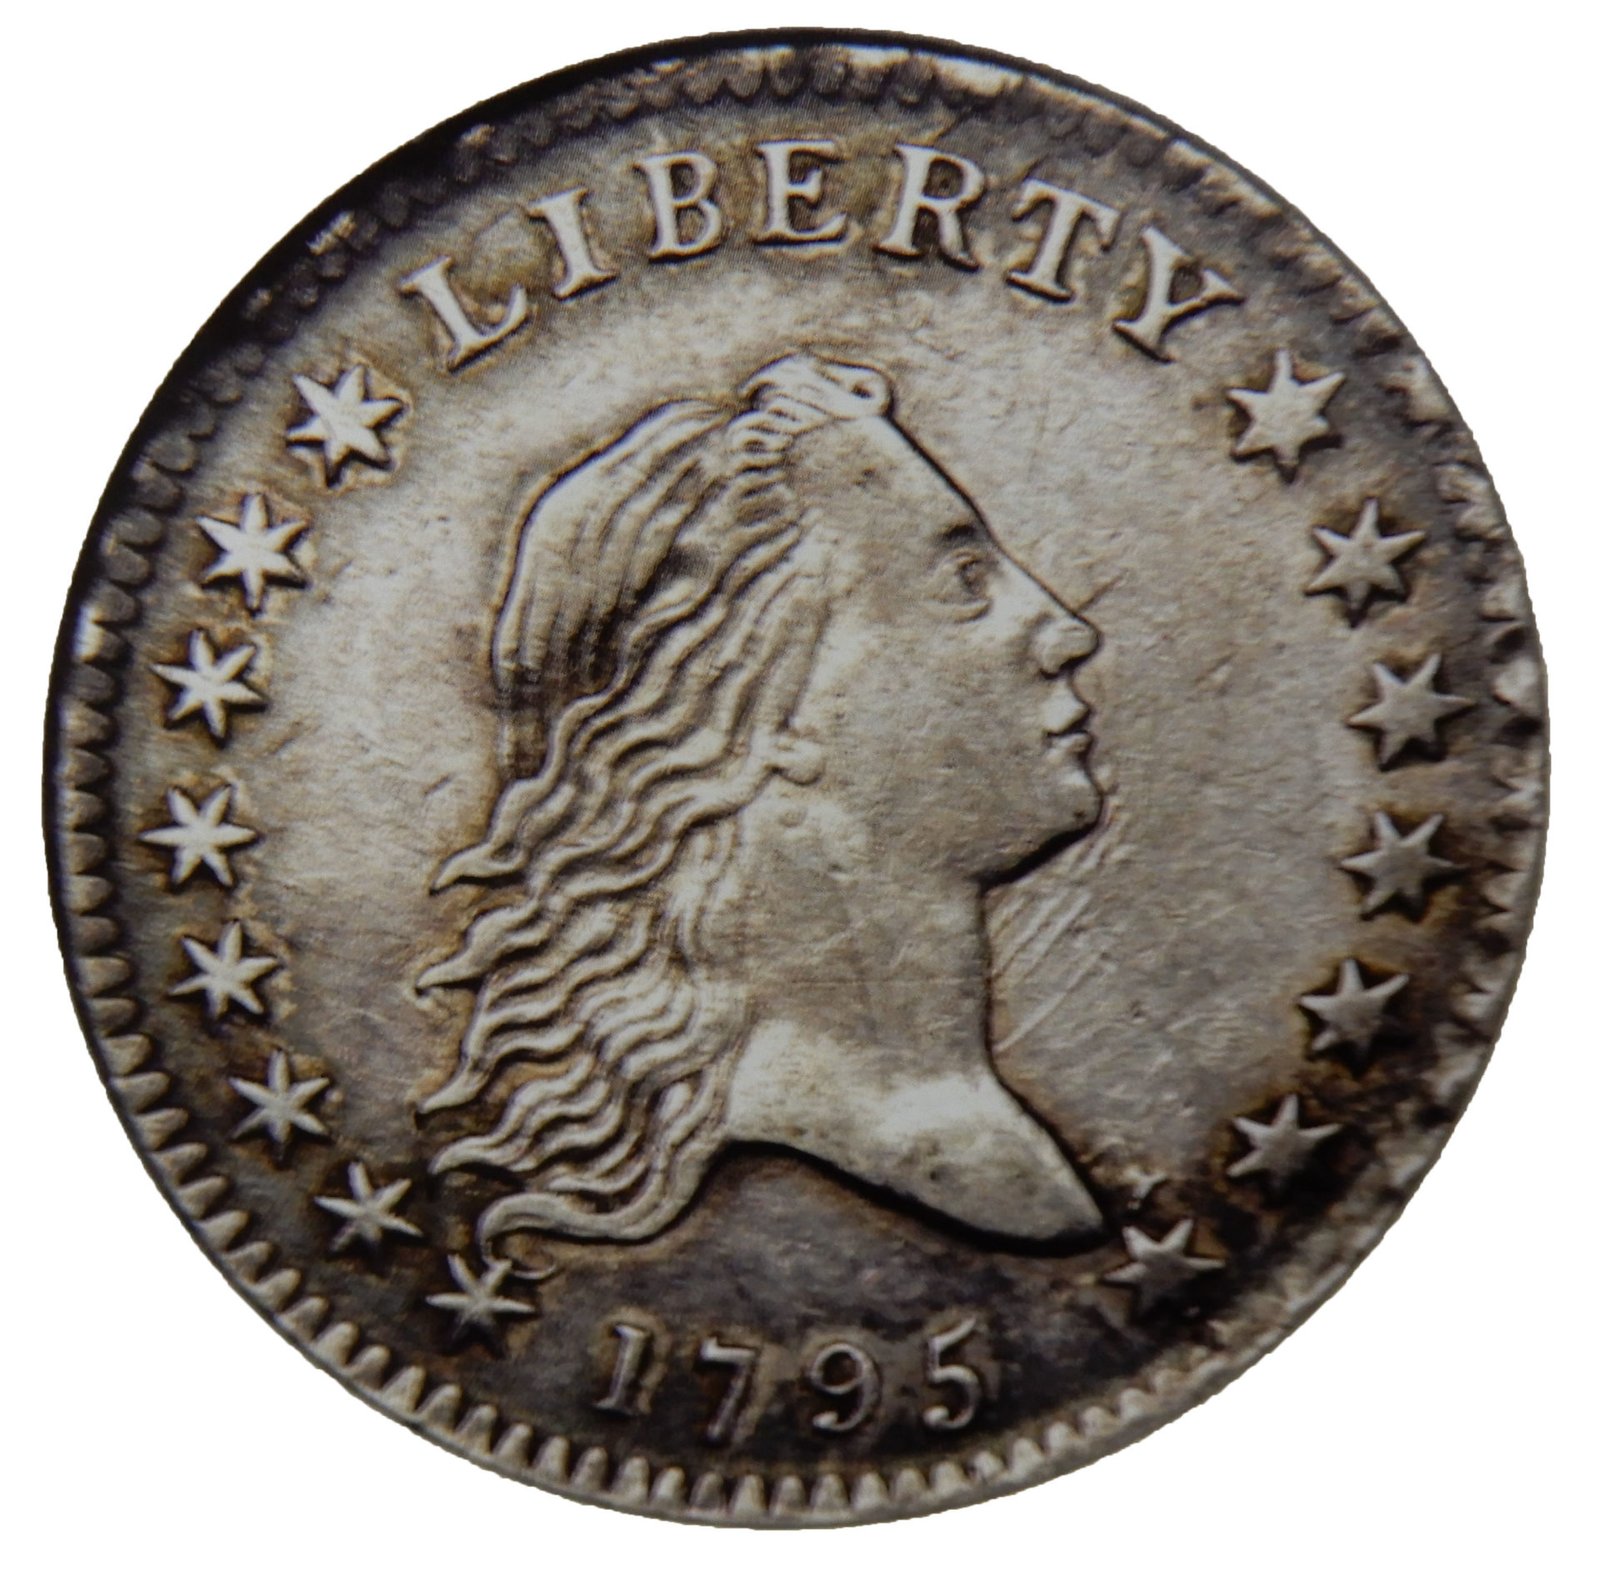 Flowing Hair Half Dollar (1794 - 1795)